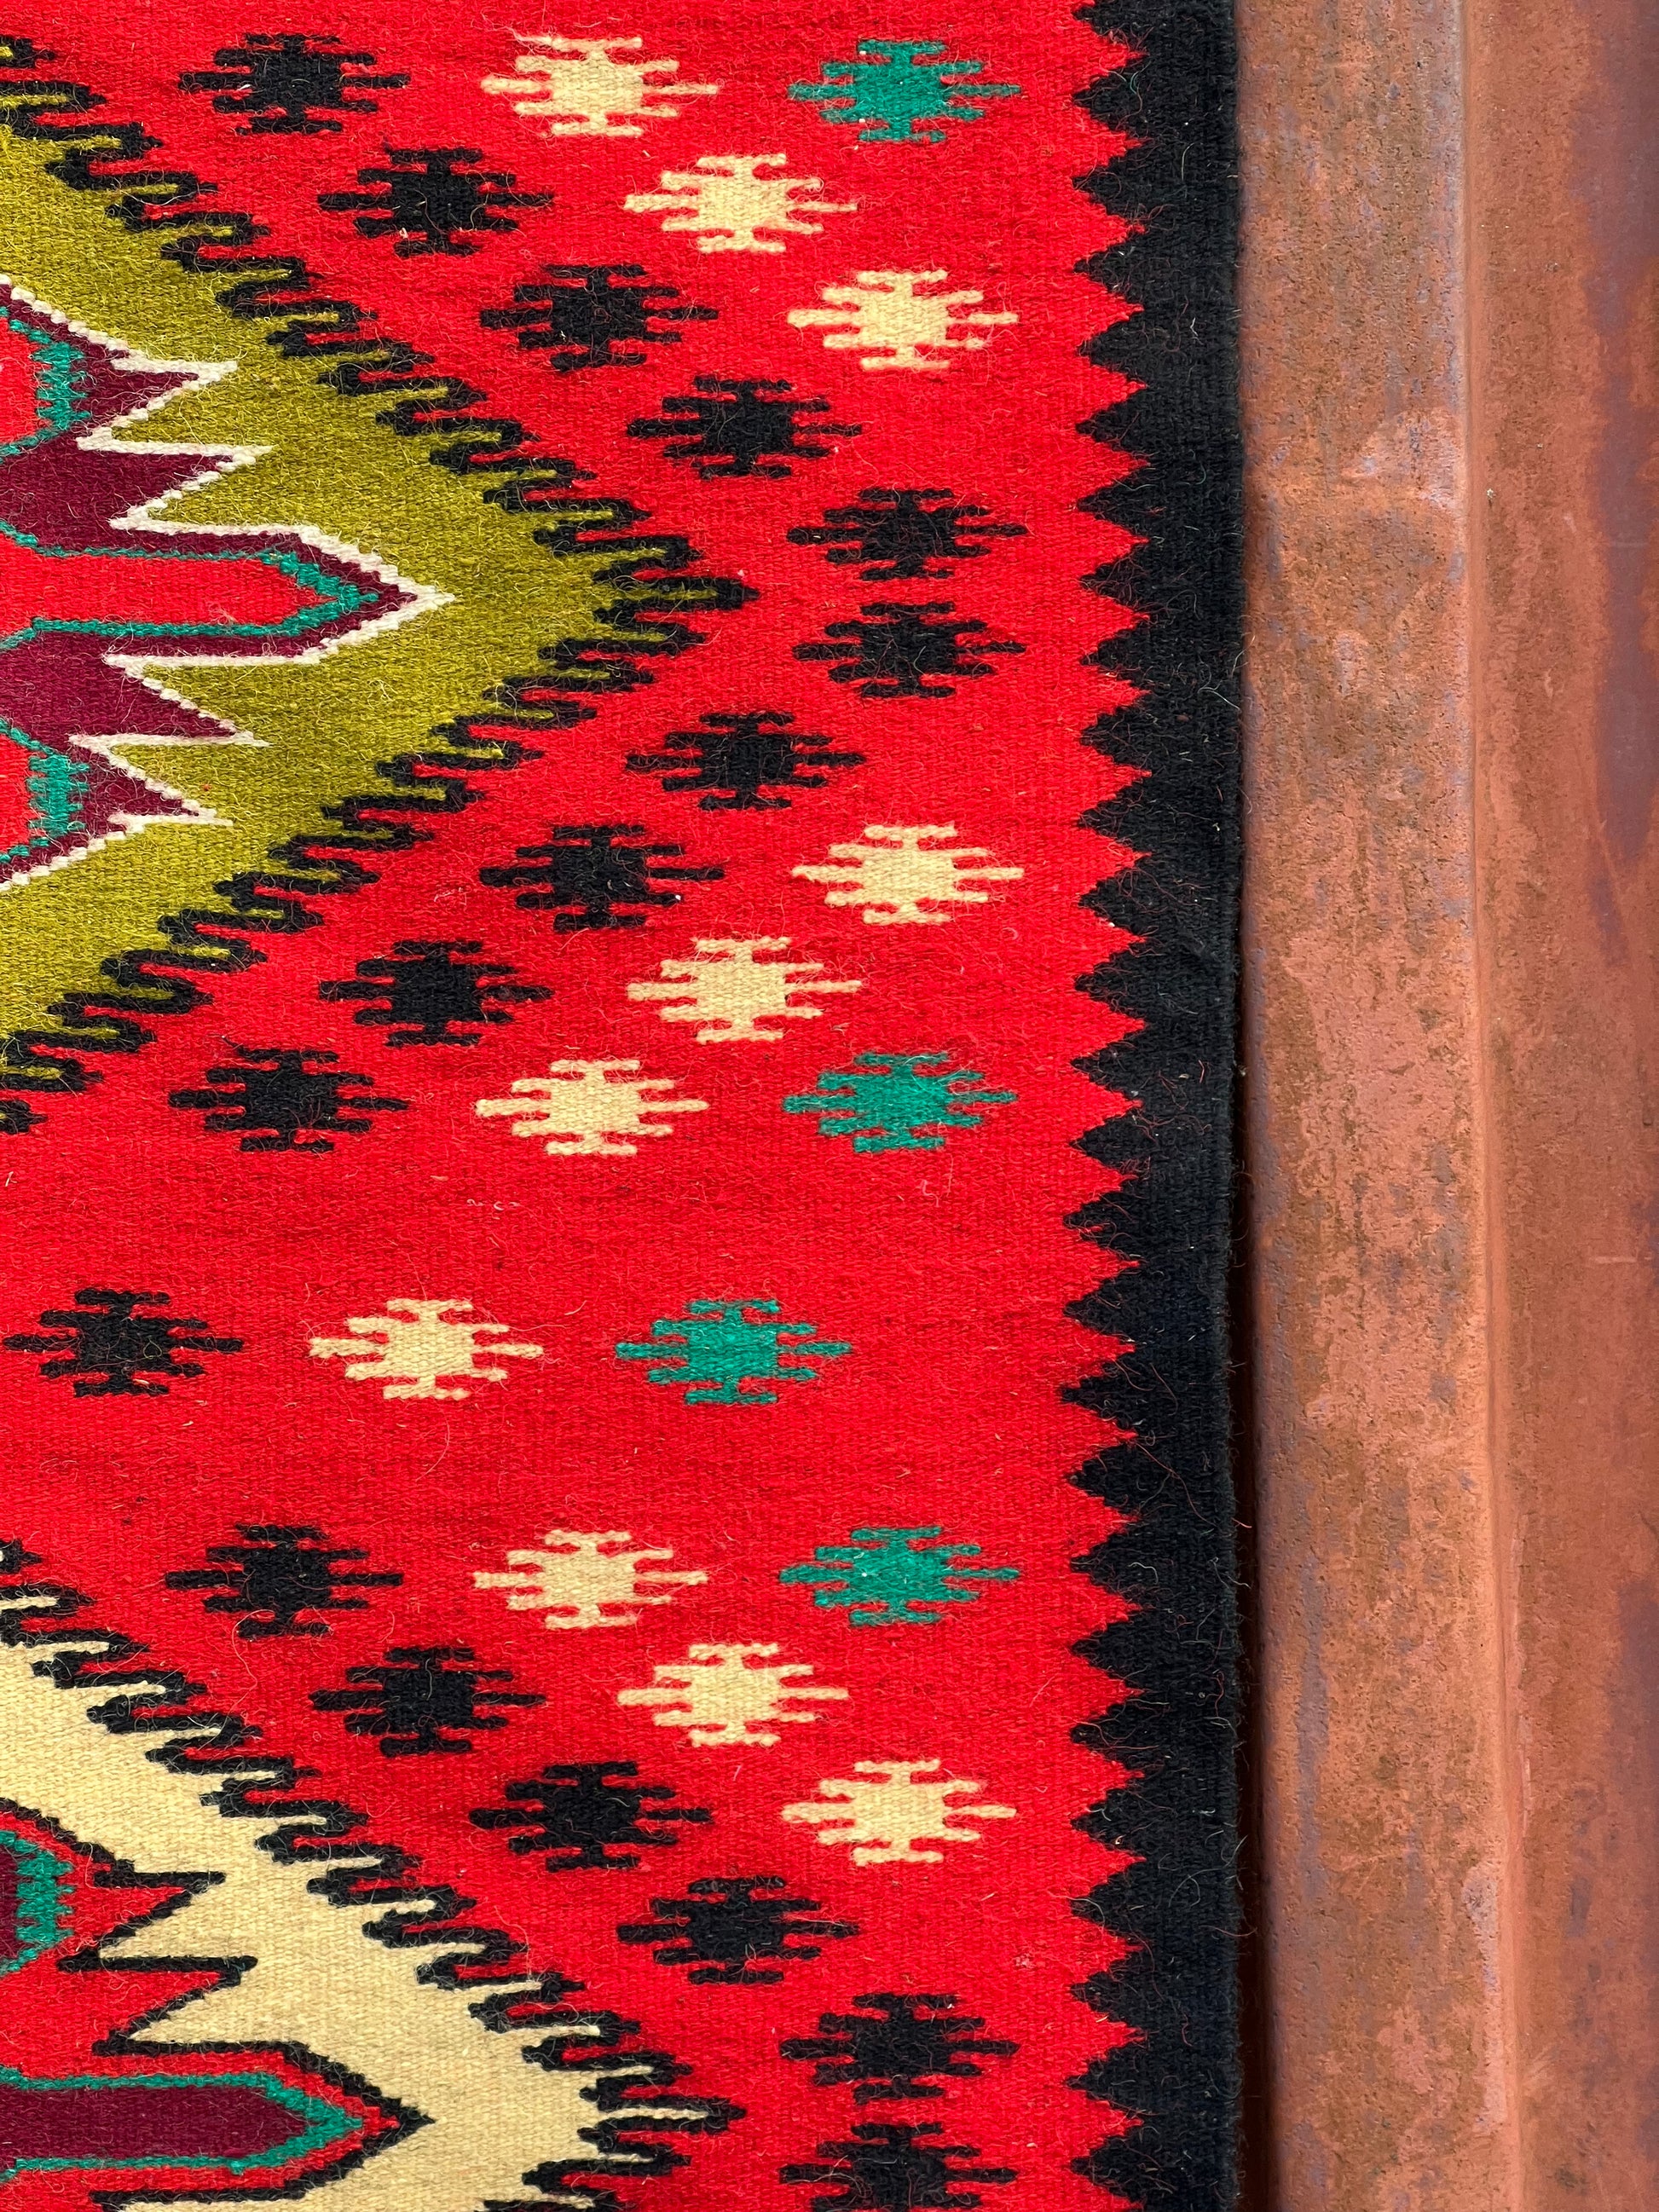 detail of red vintage carpet